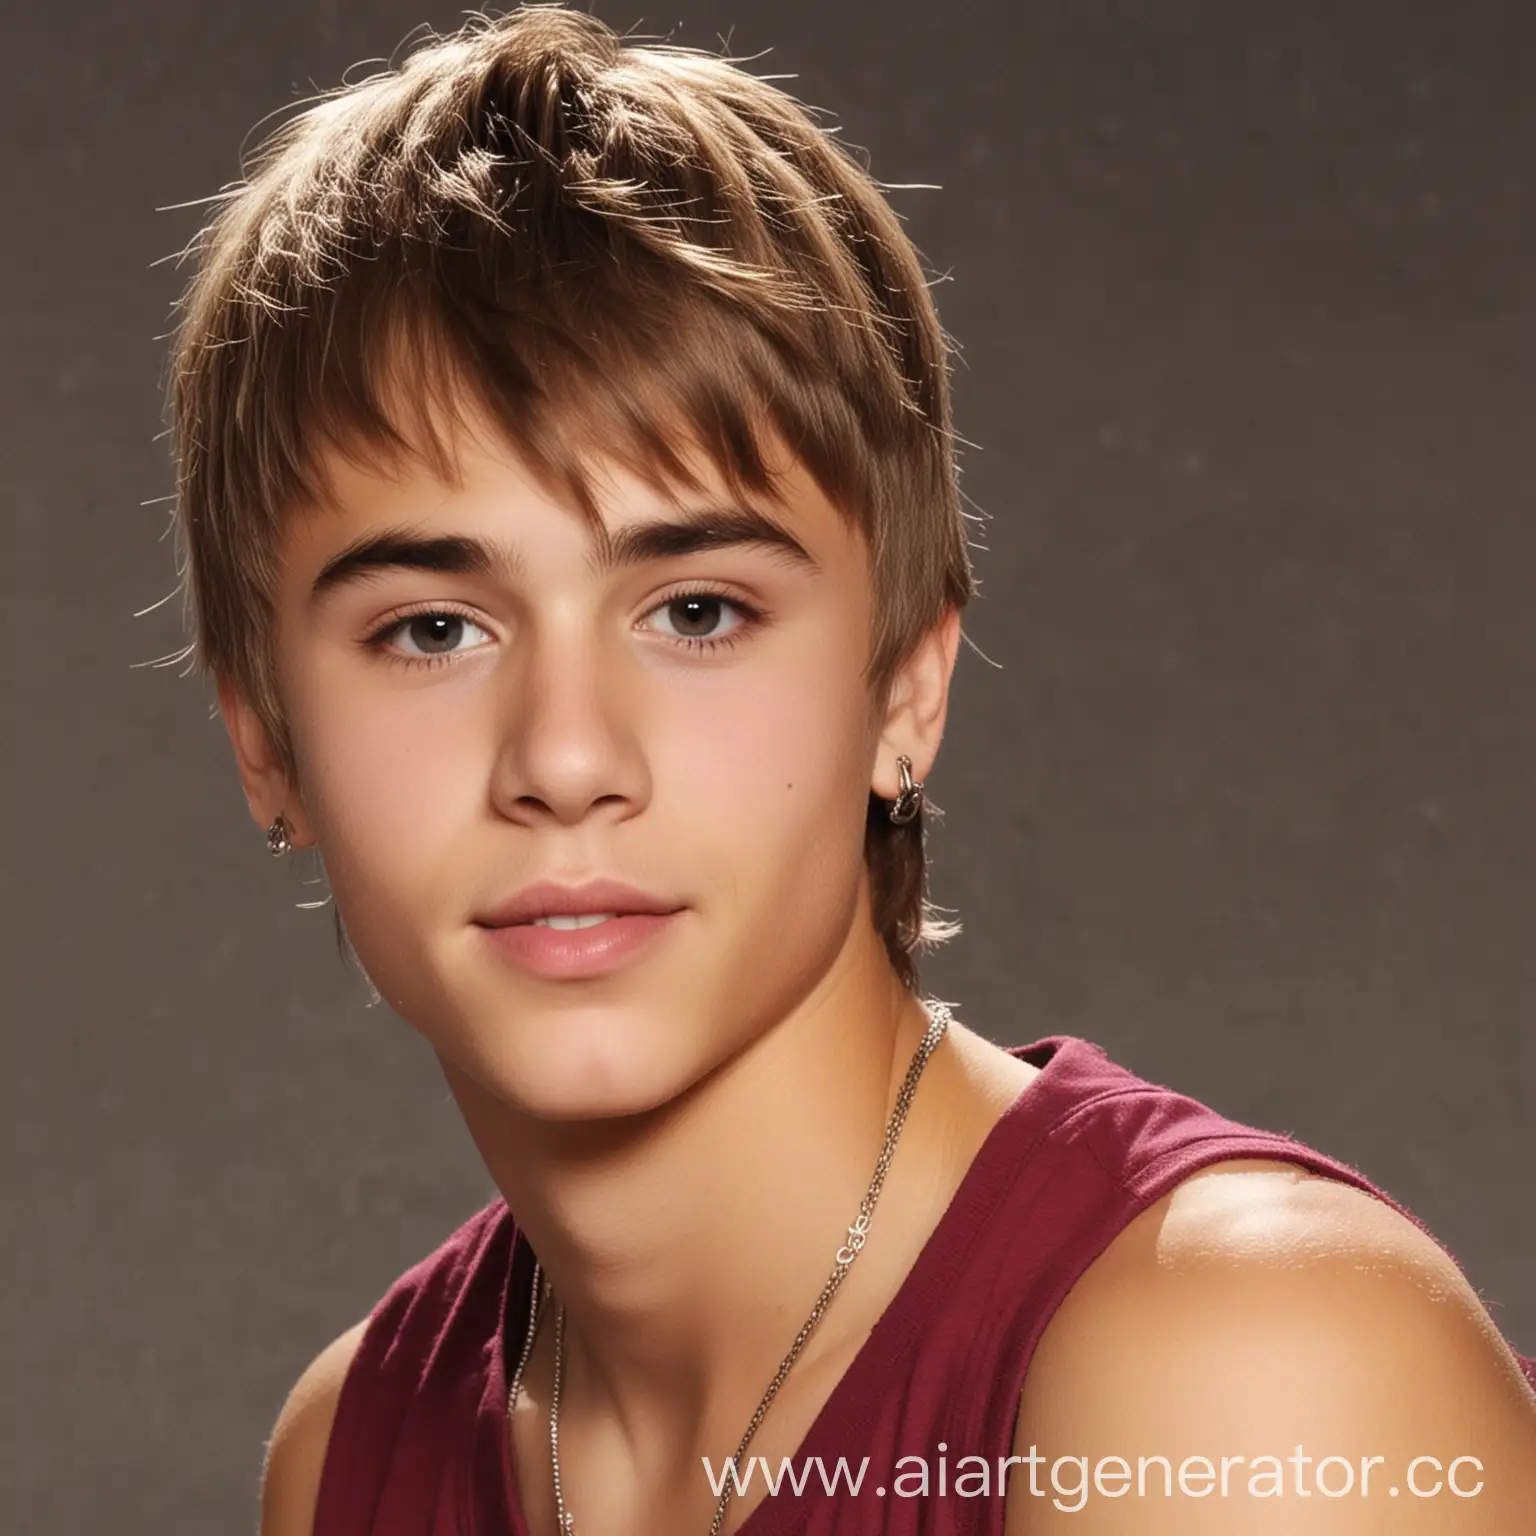 Justin beiber age15